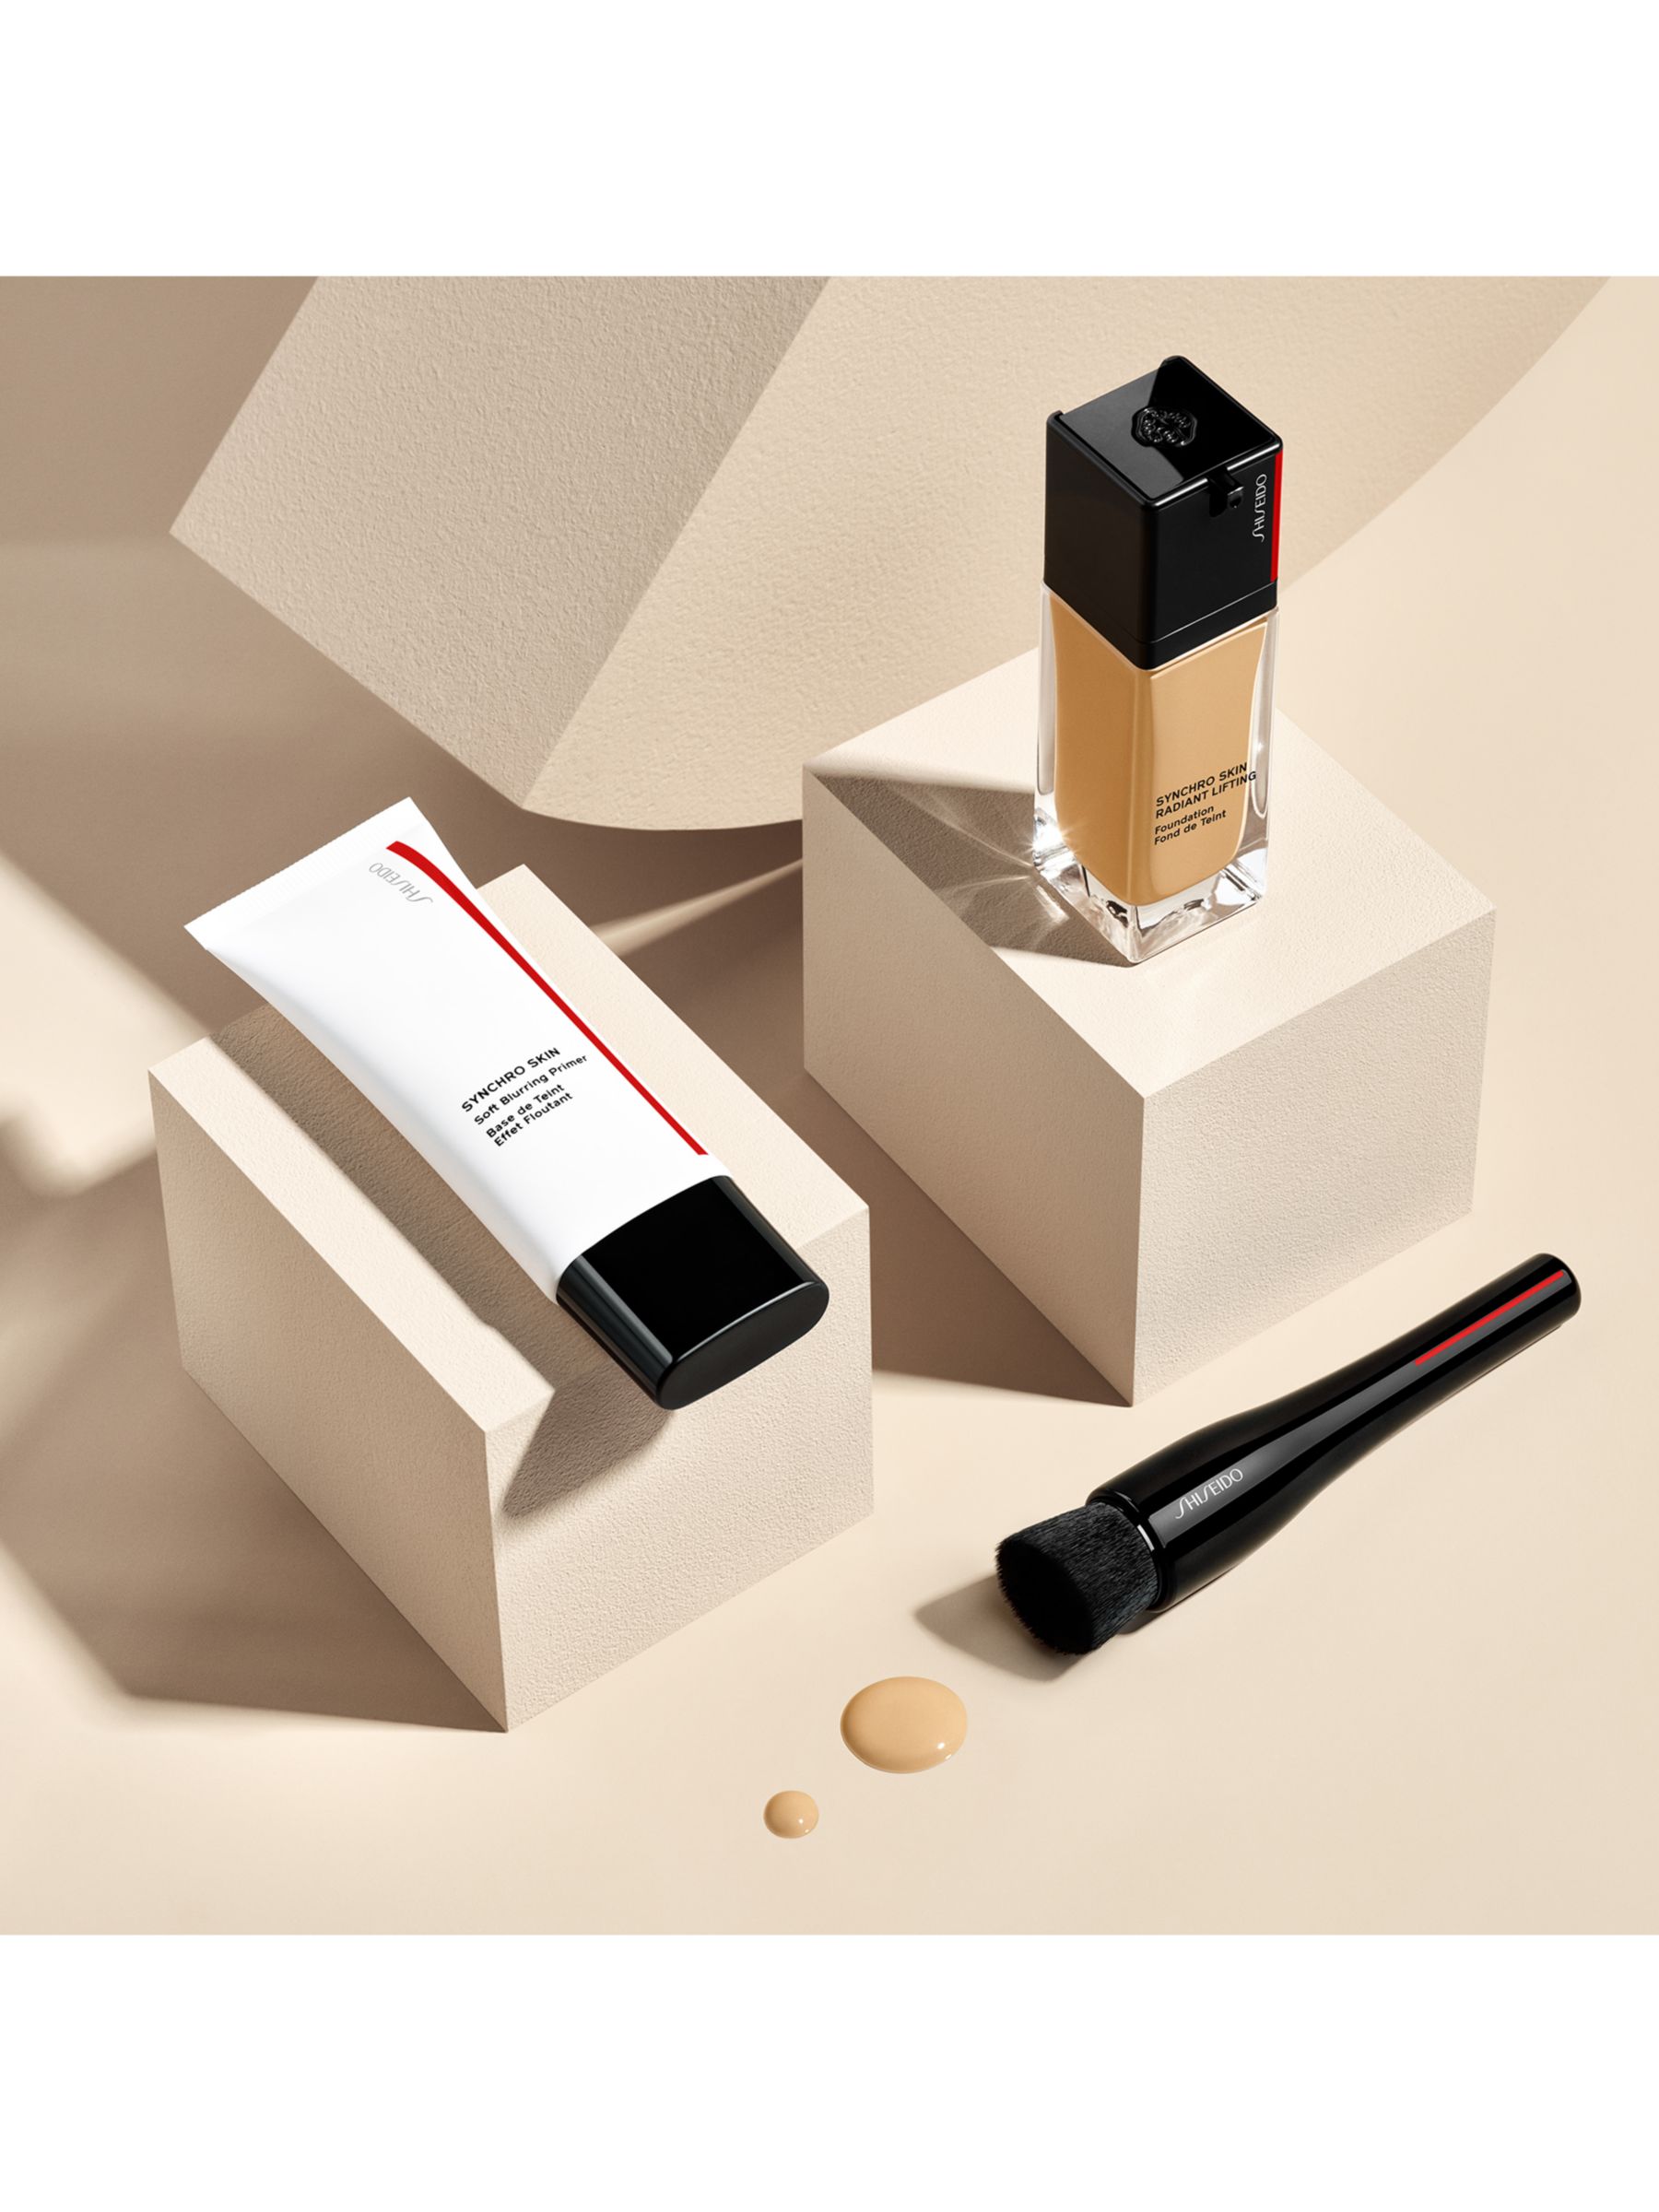 Shiseido Synchro Skin Soft Blurring Primer, 30ml